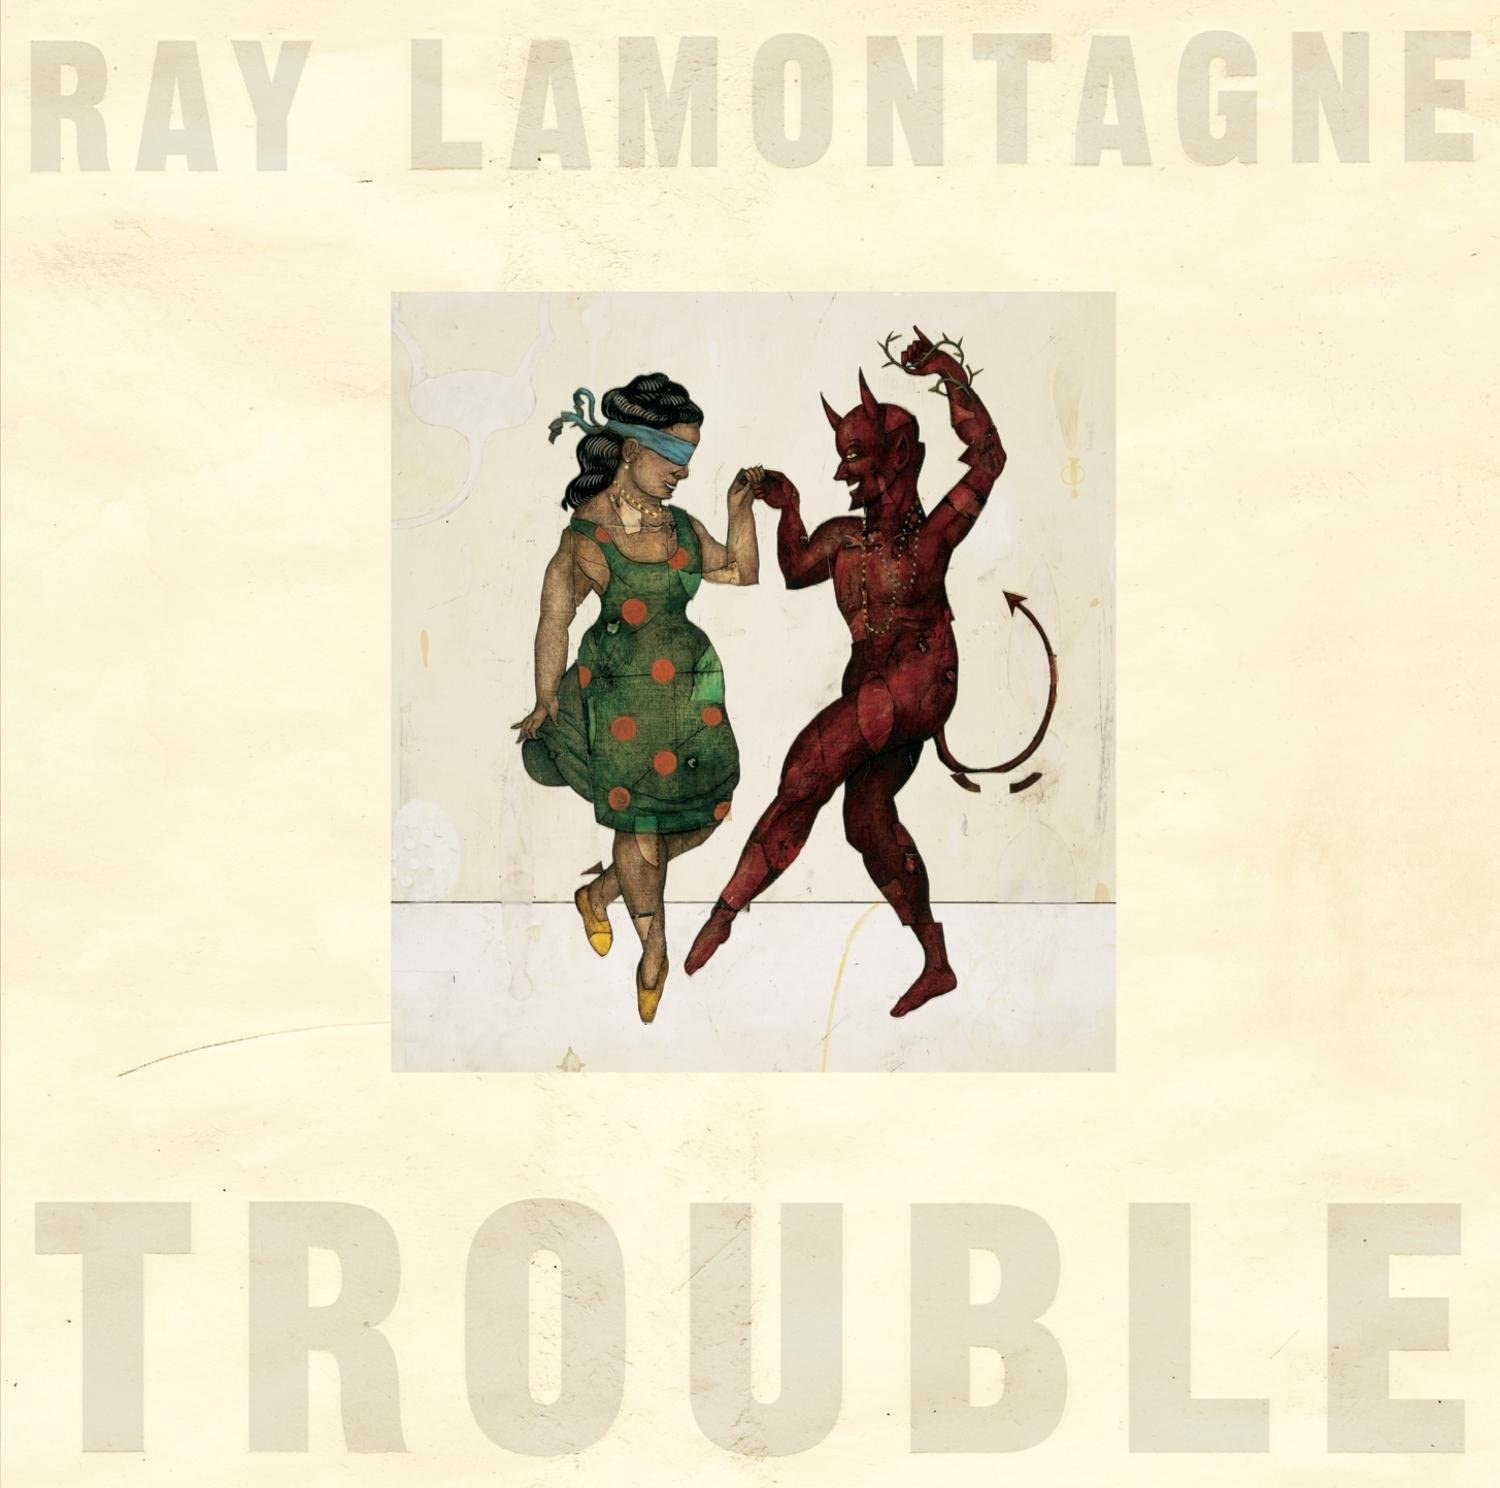 Ray Lamontagne ‎– Trouble